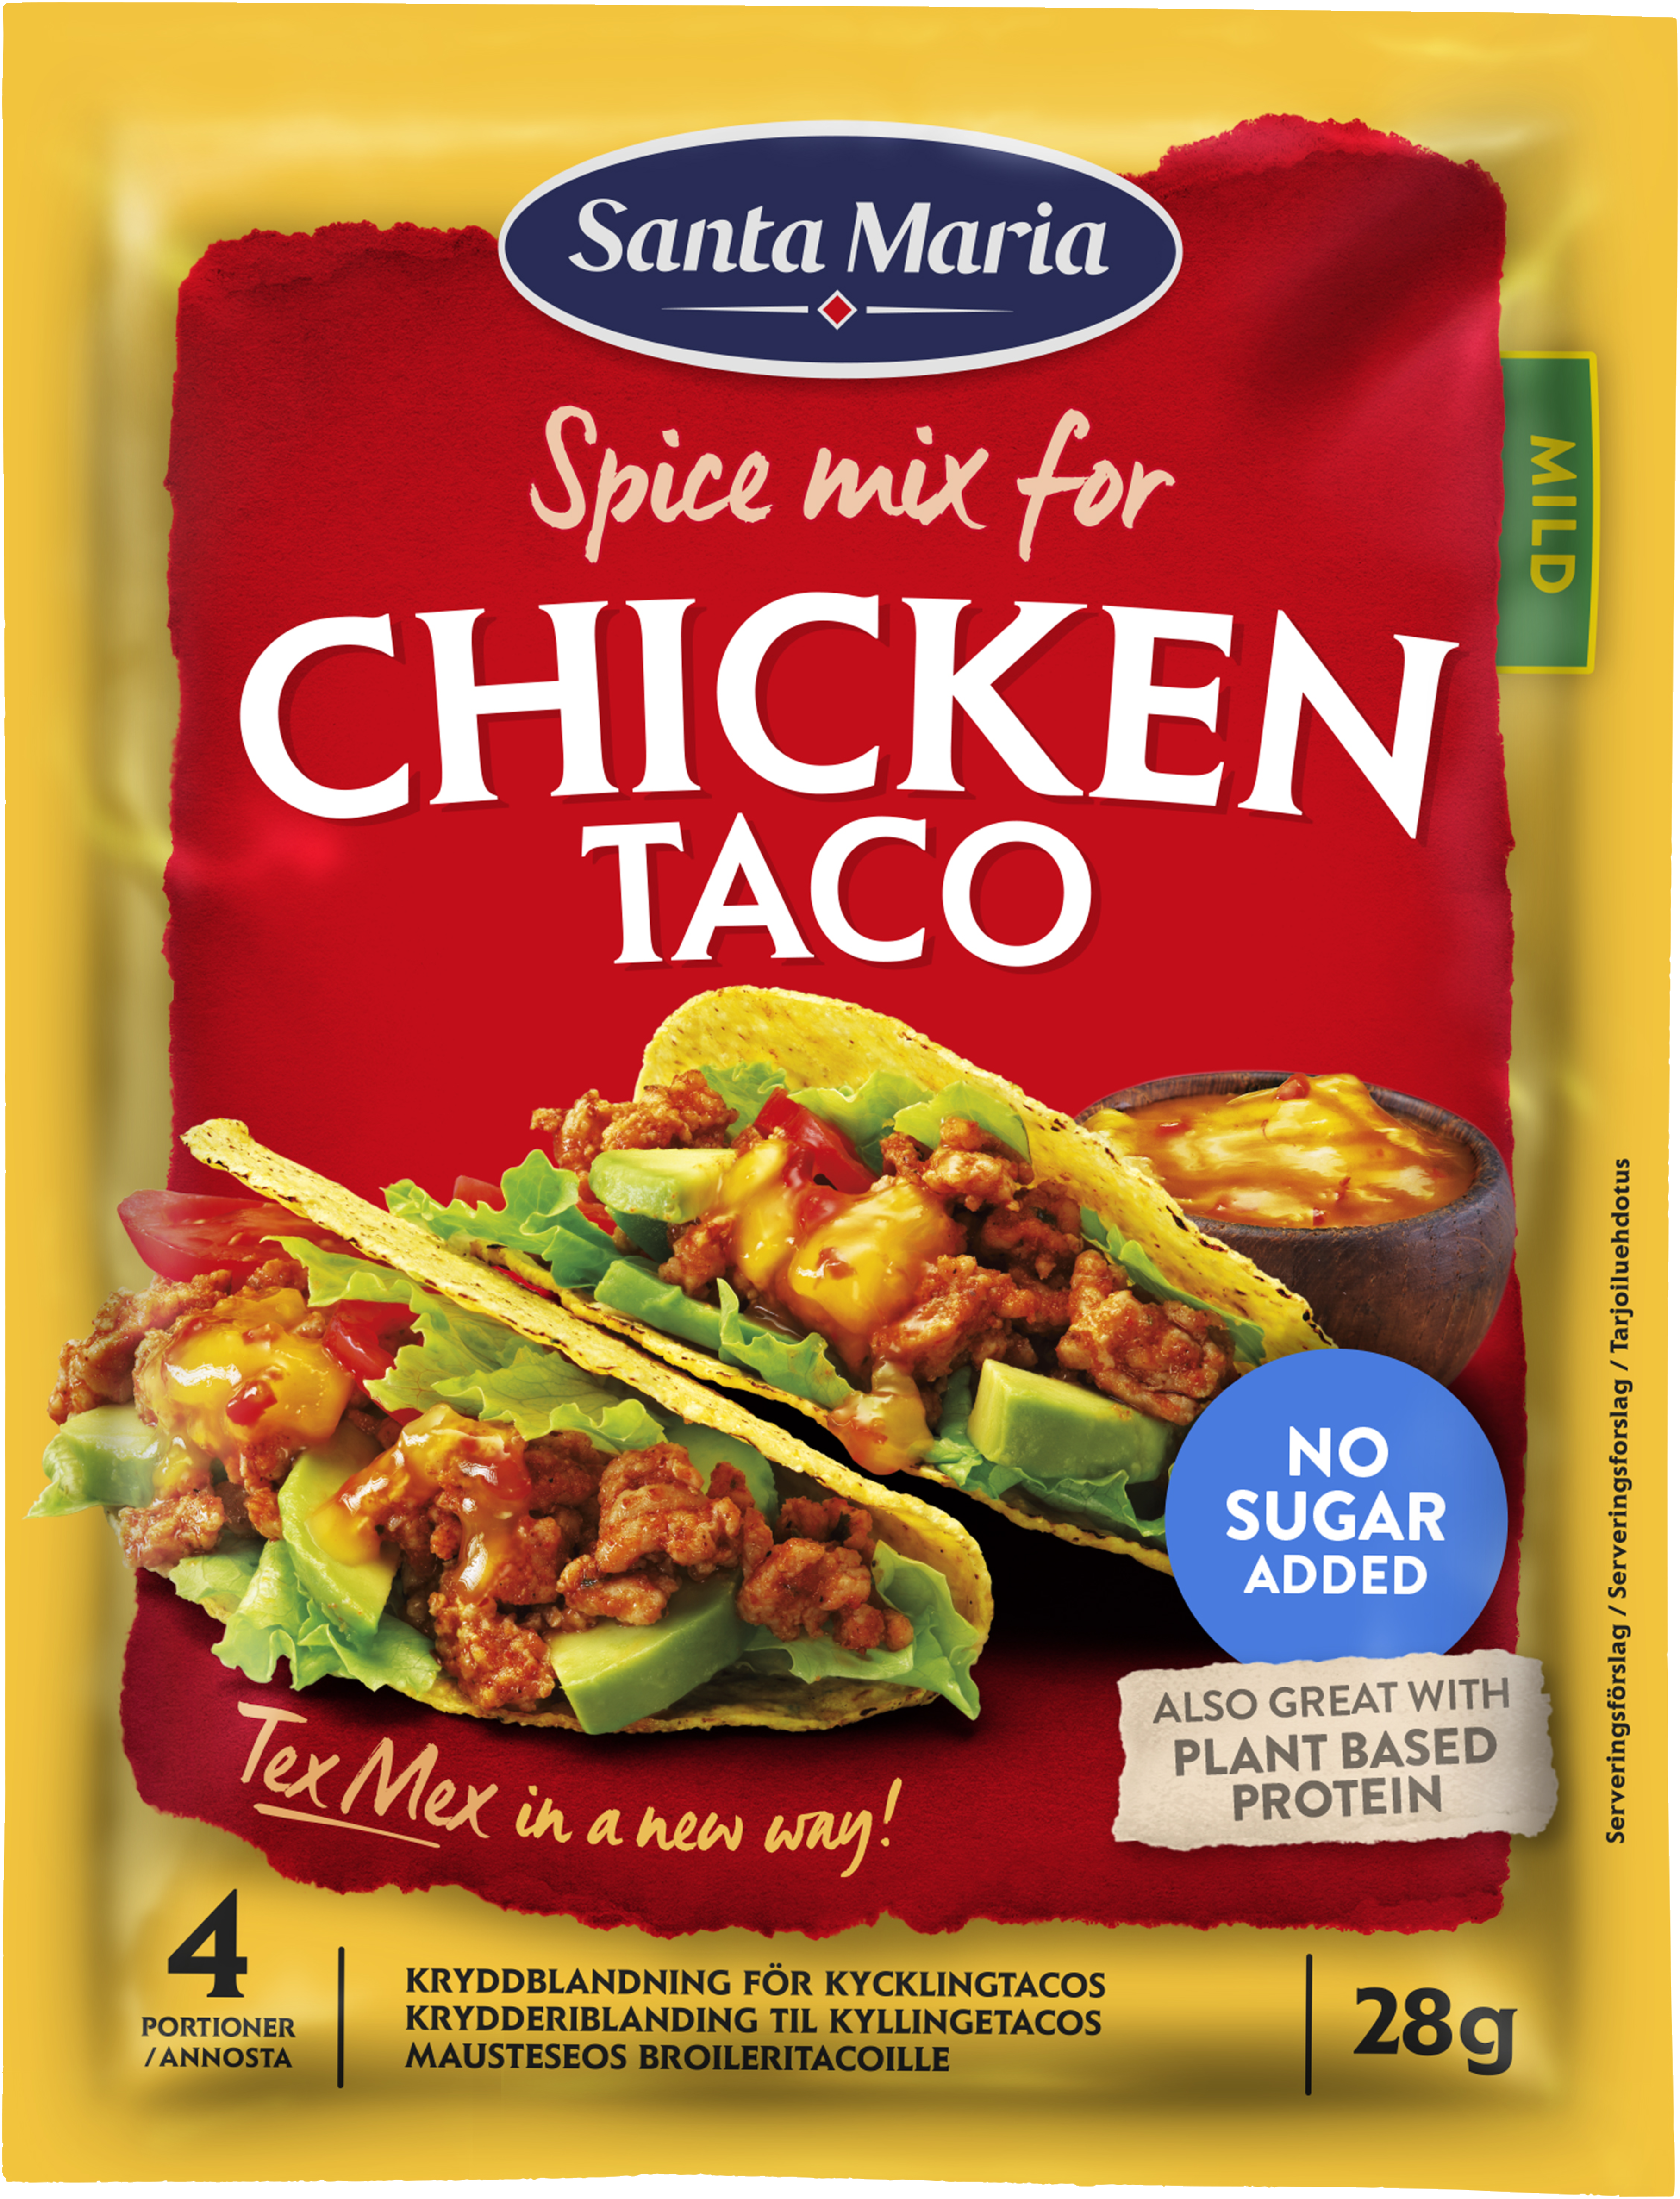 wafer tank indre Chicken Taco Spice Mix | Santa Maria